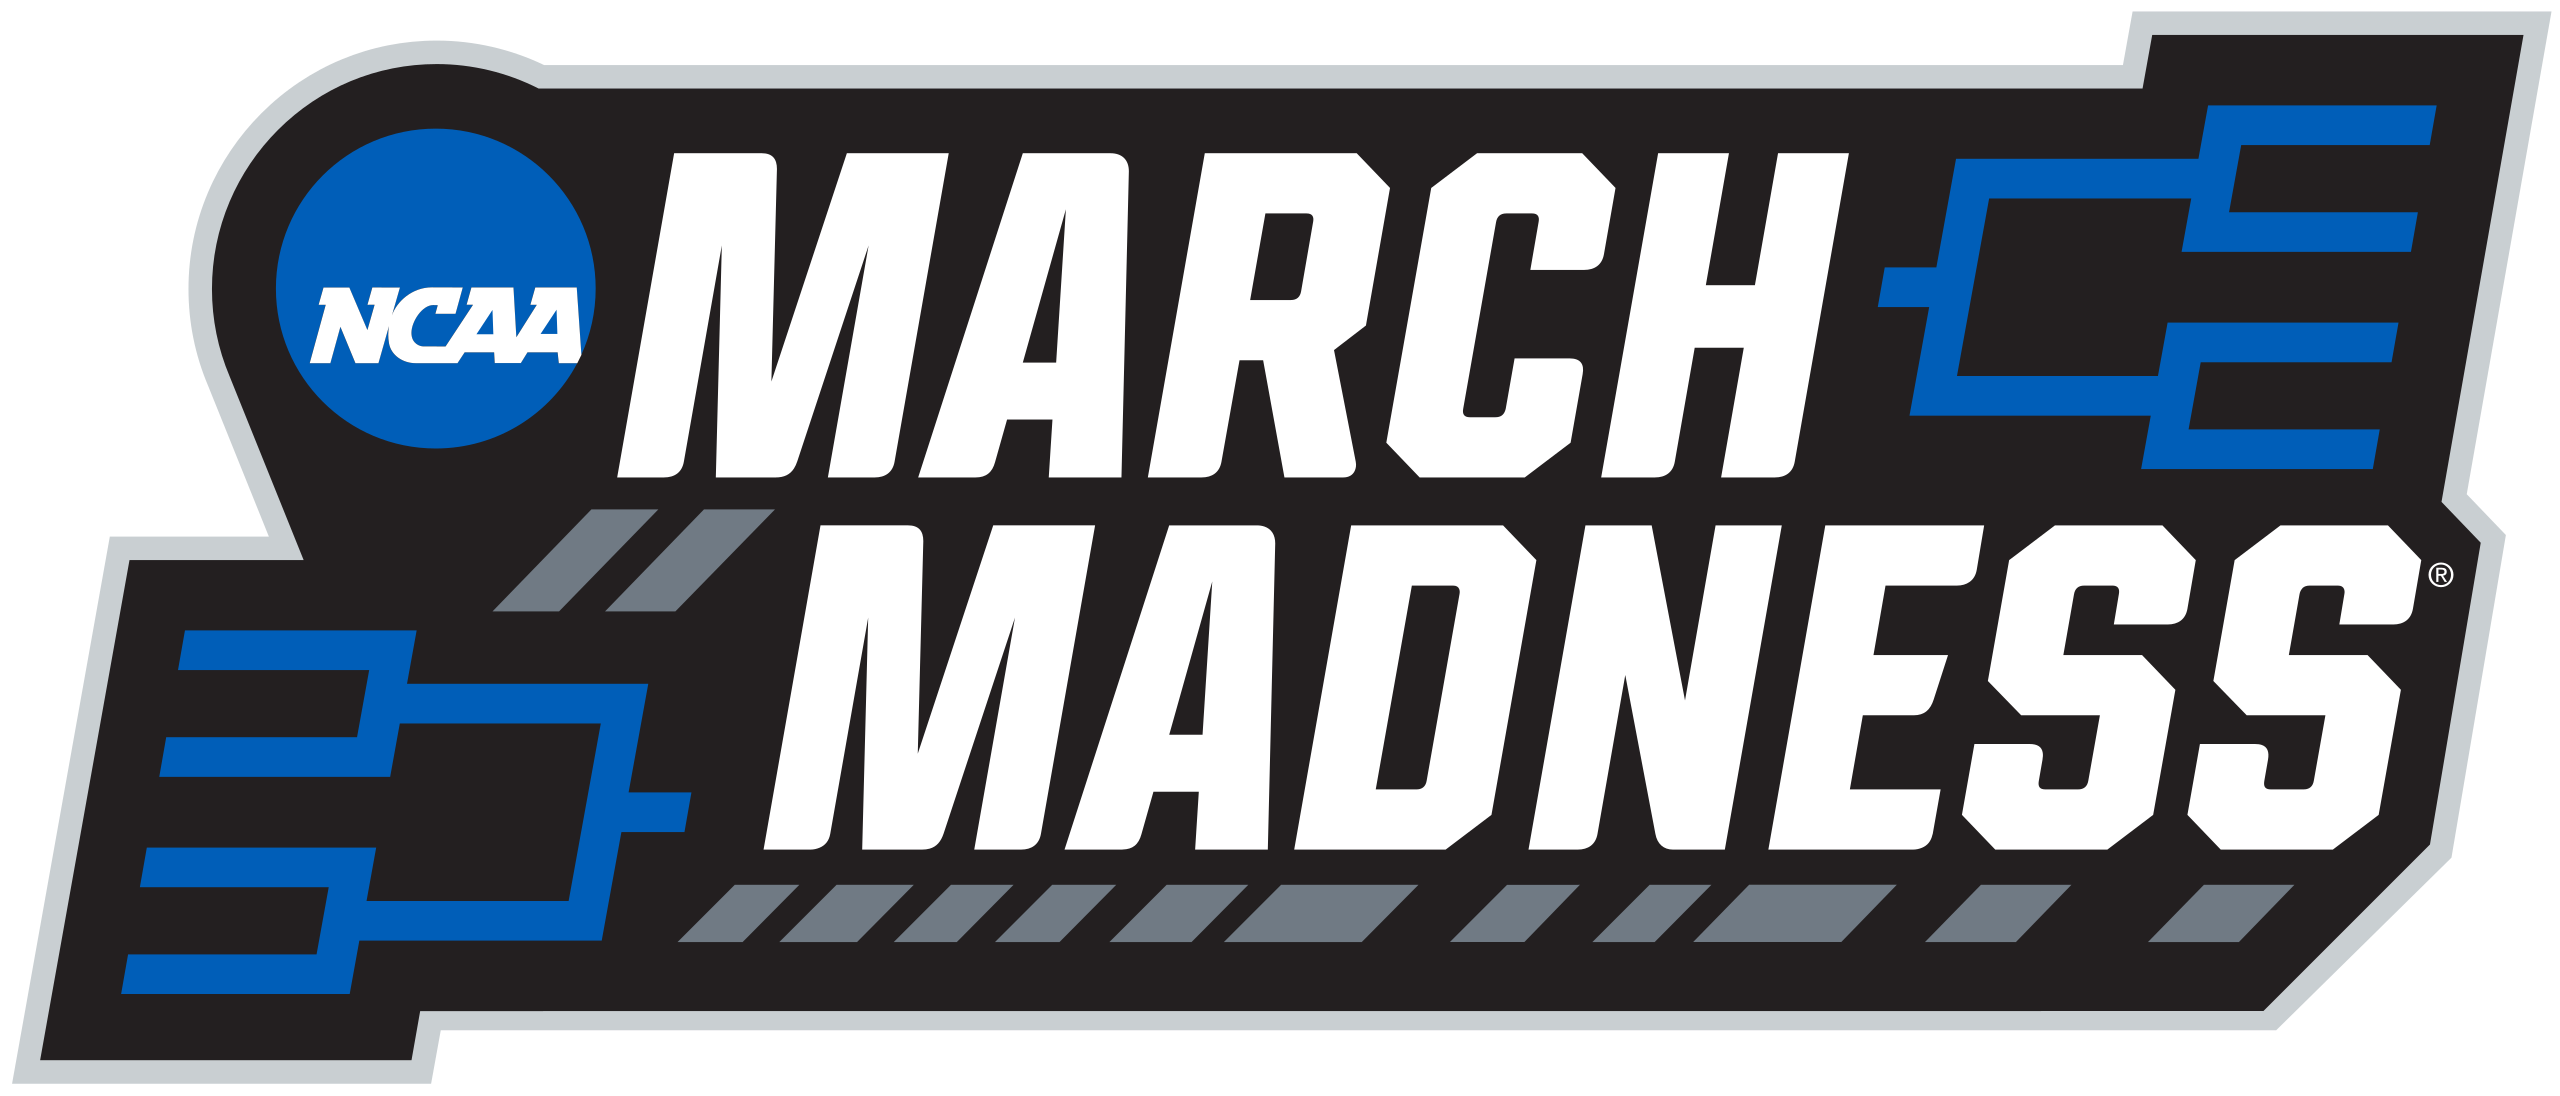 NCAA March Madness Tournament Brackets